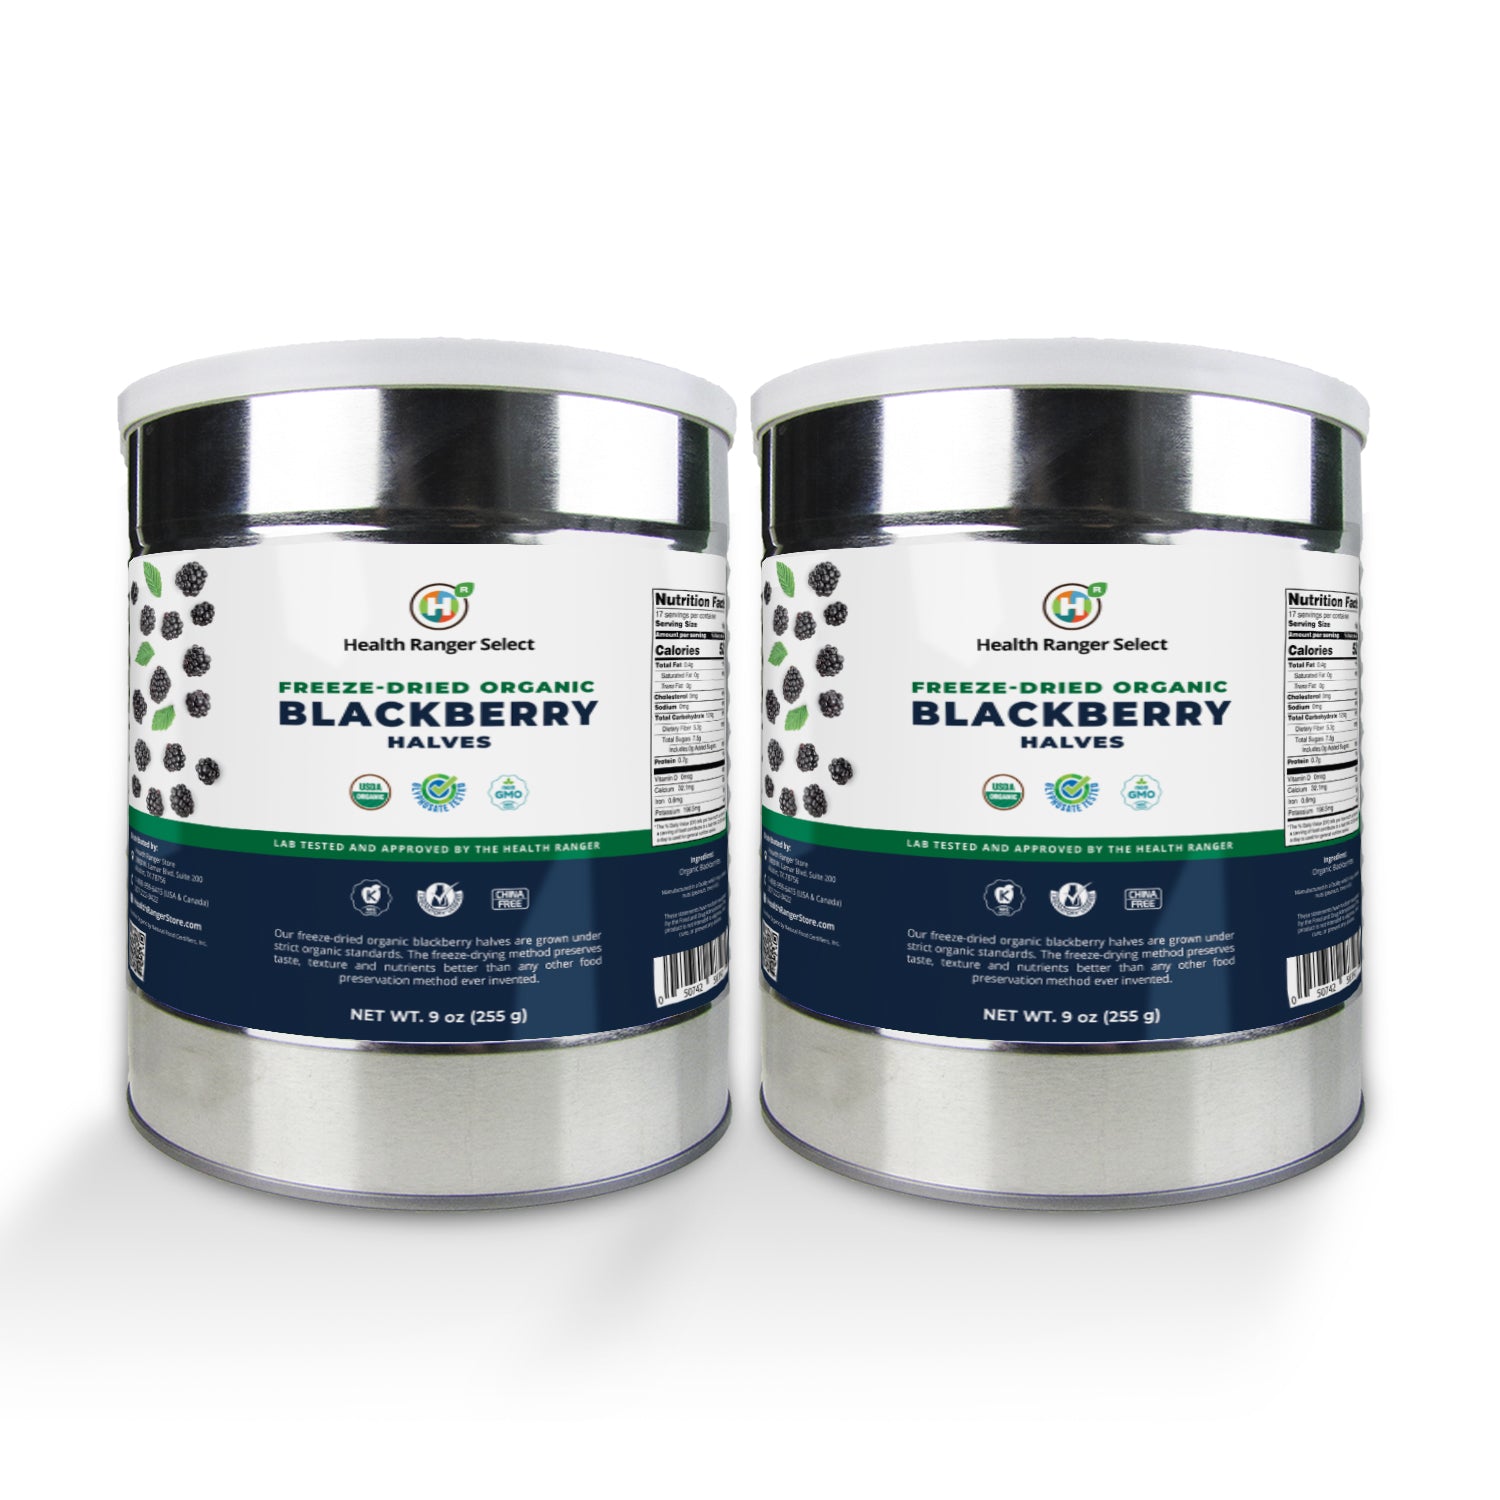 Freeze-Dried Organic Blackberry Halves (9oz, 